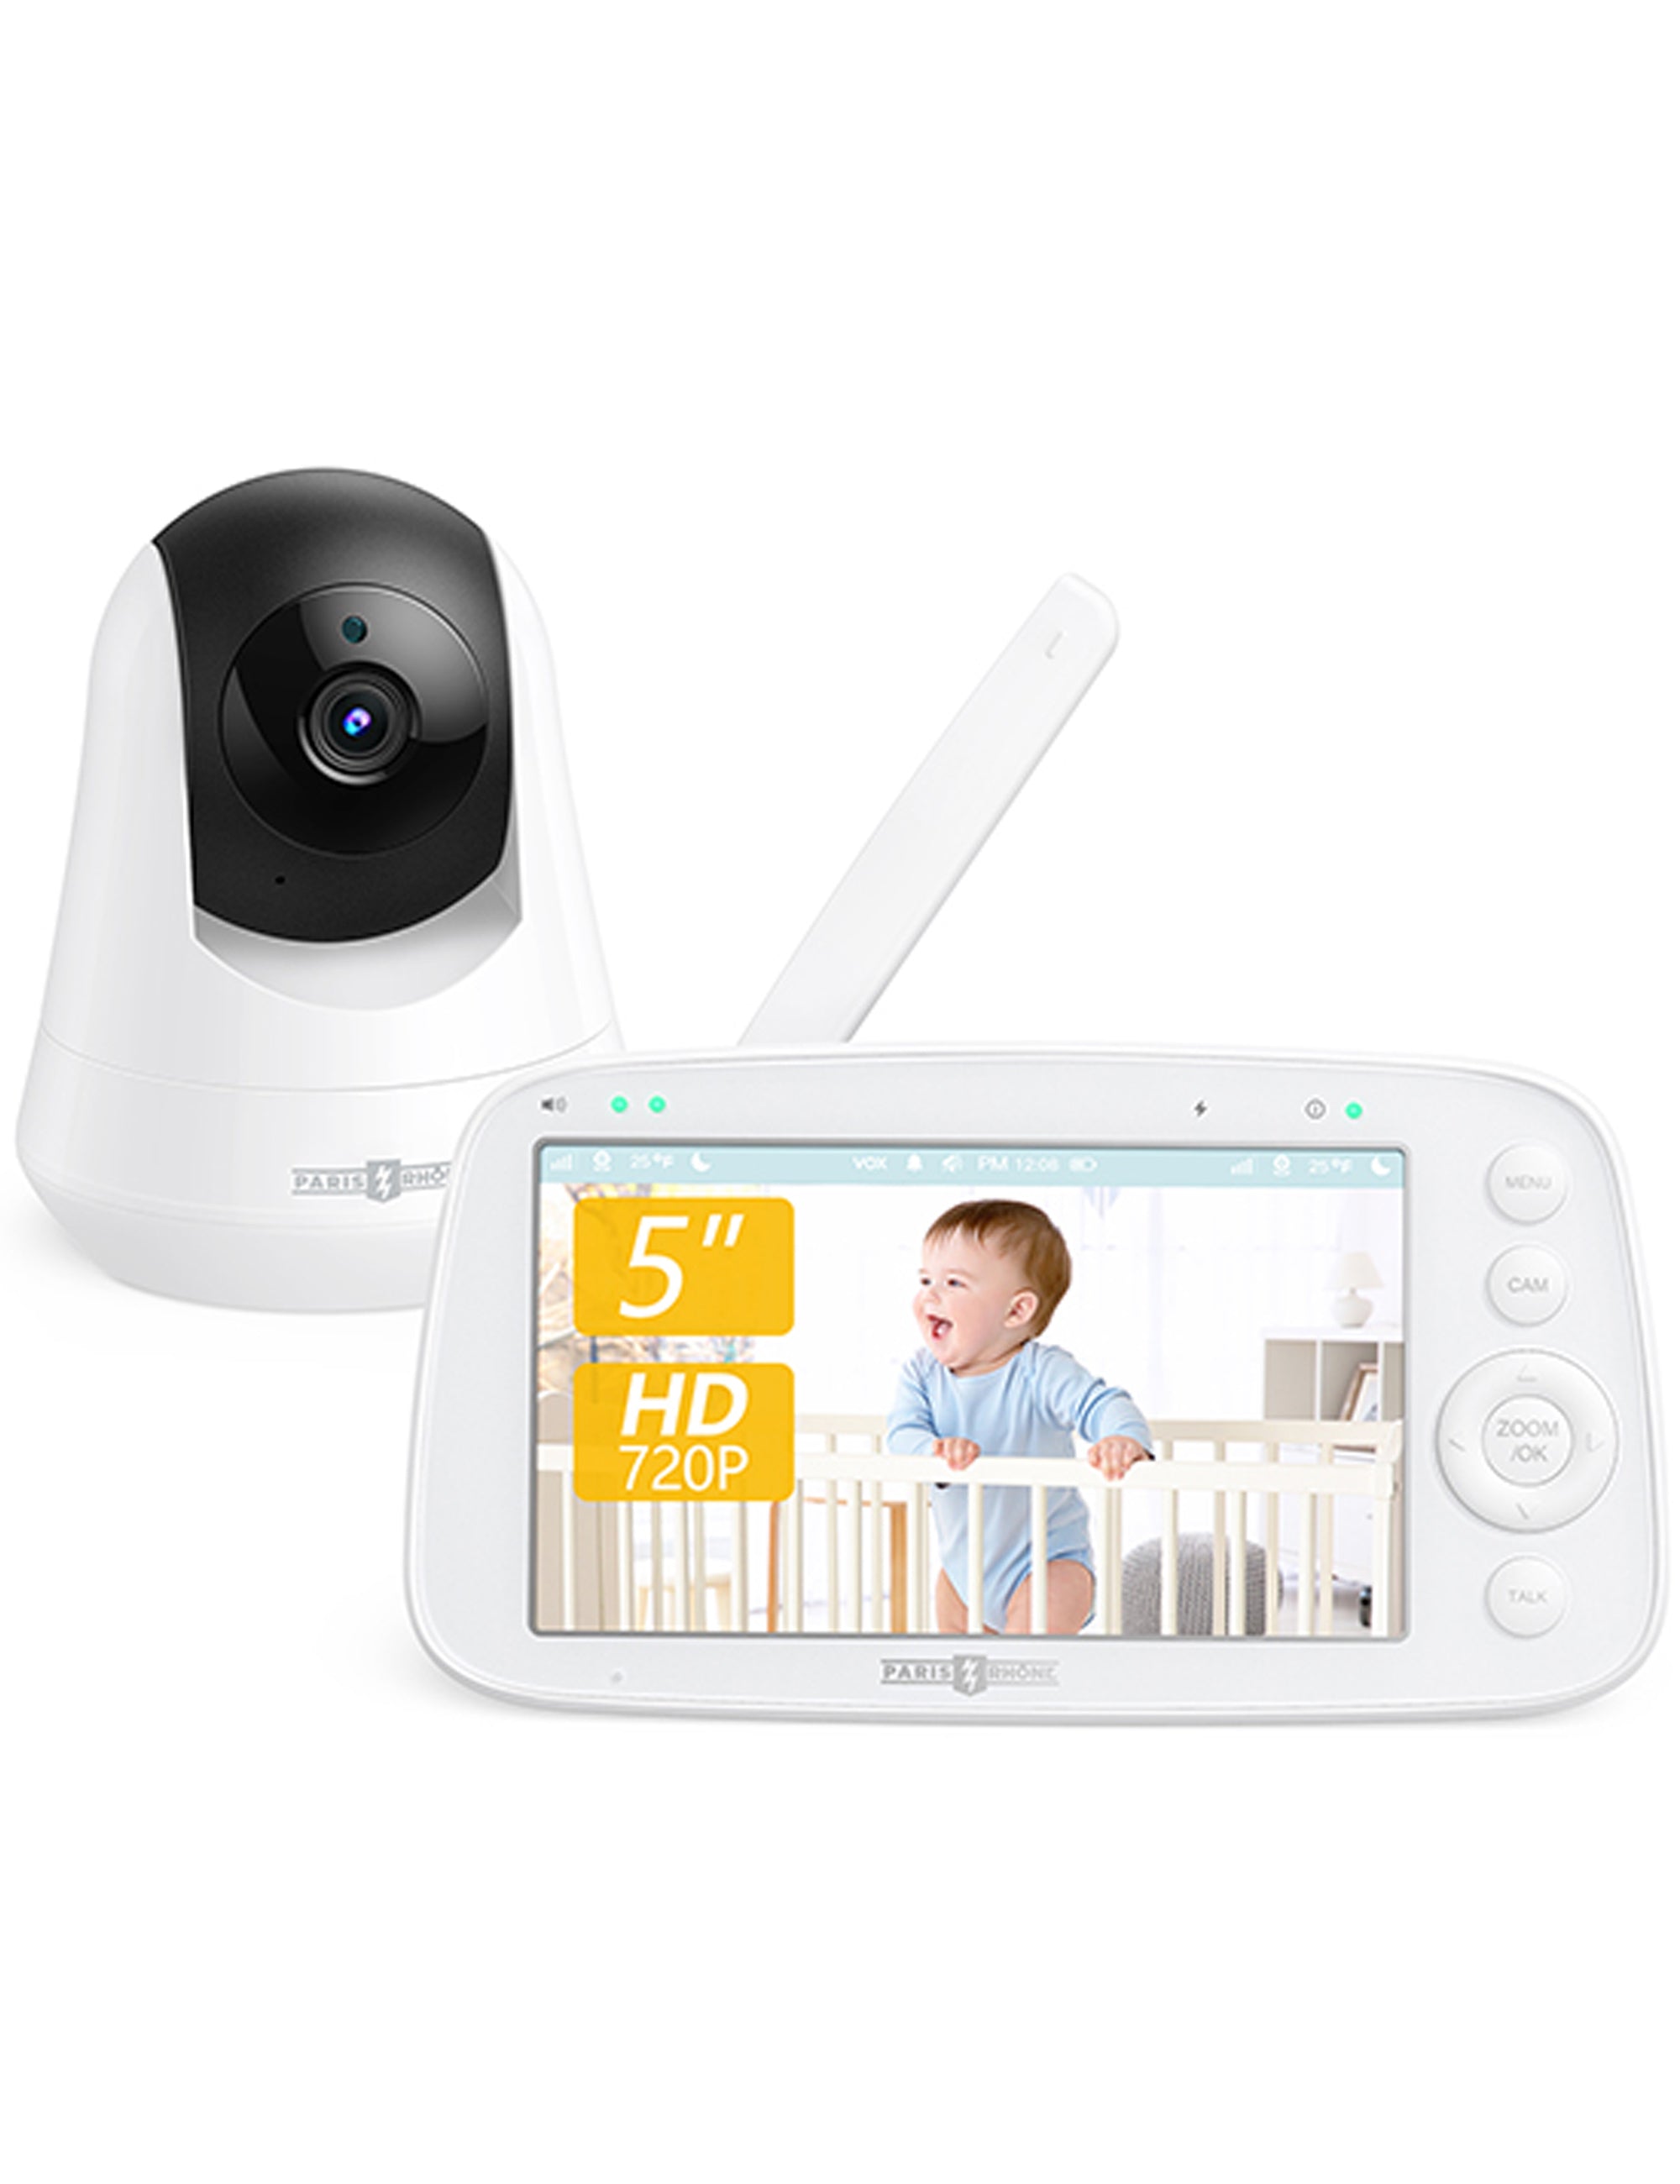 Paris Rhône 720P HD Baby Monitor IH003, Wide-Angle Monitoring,5 inch Display